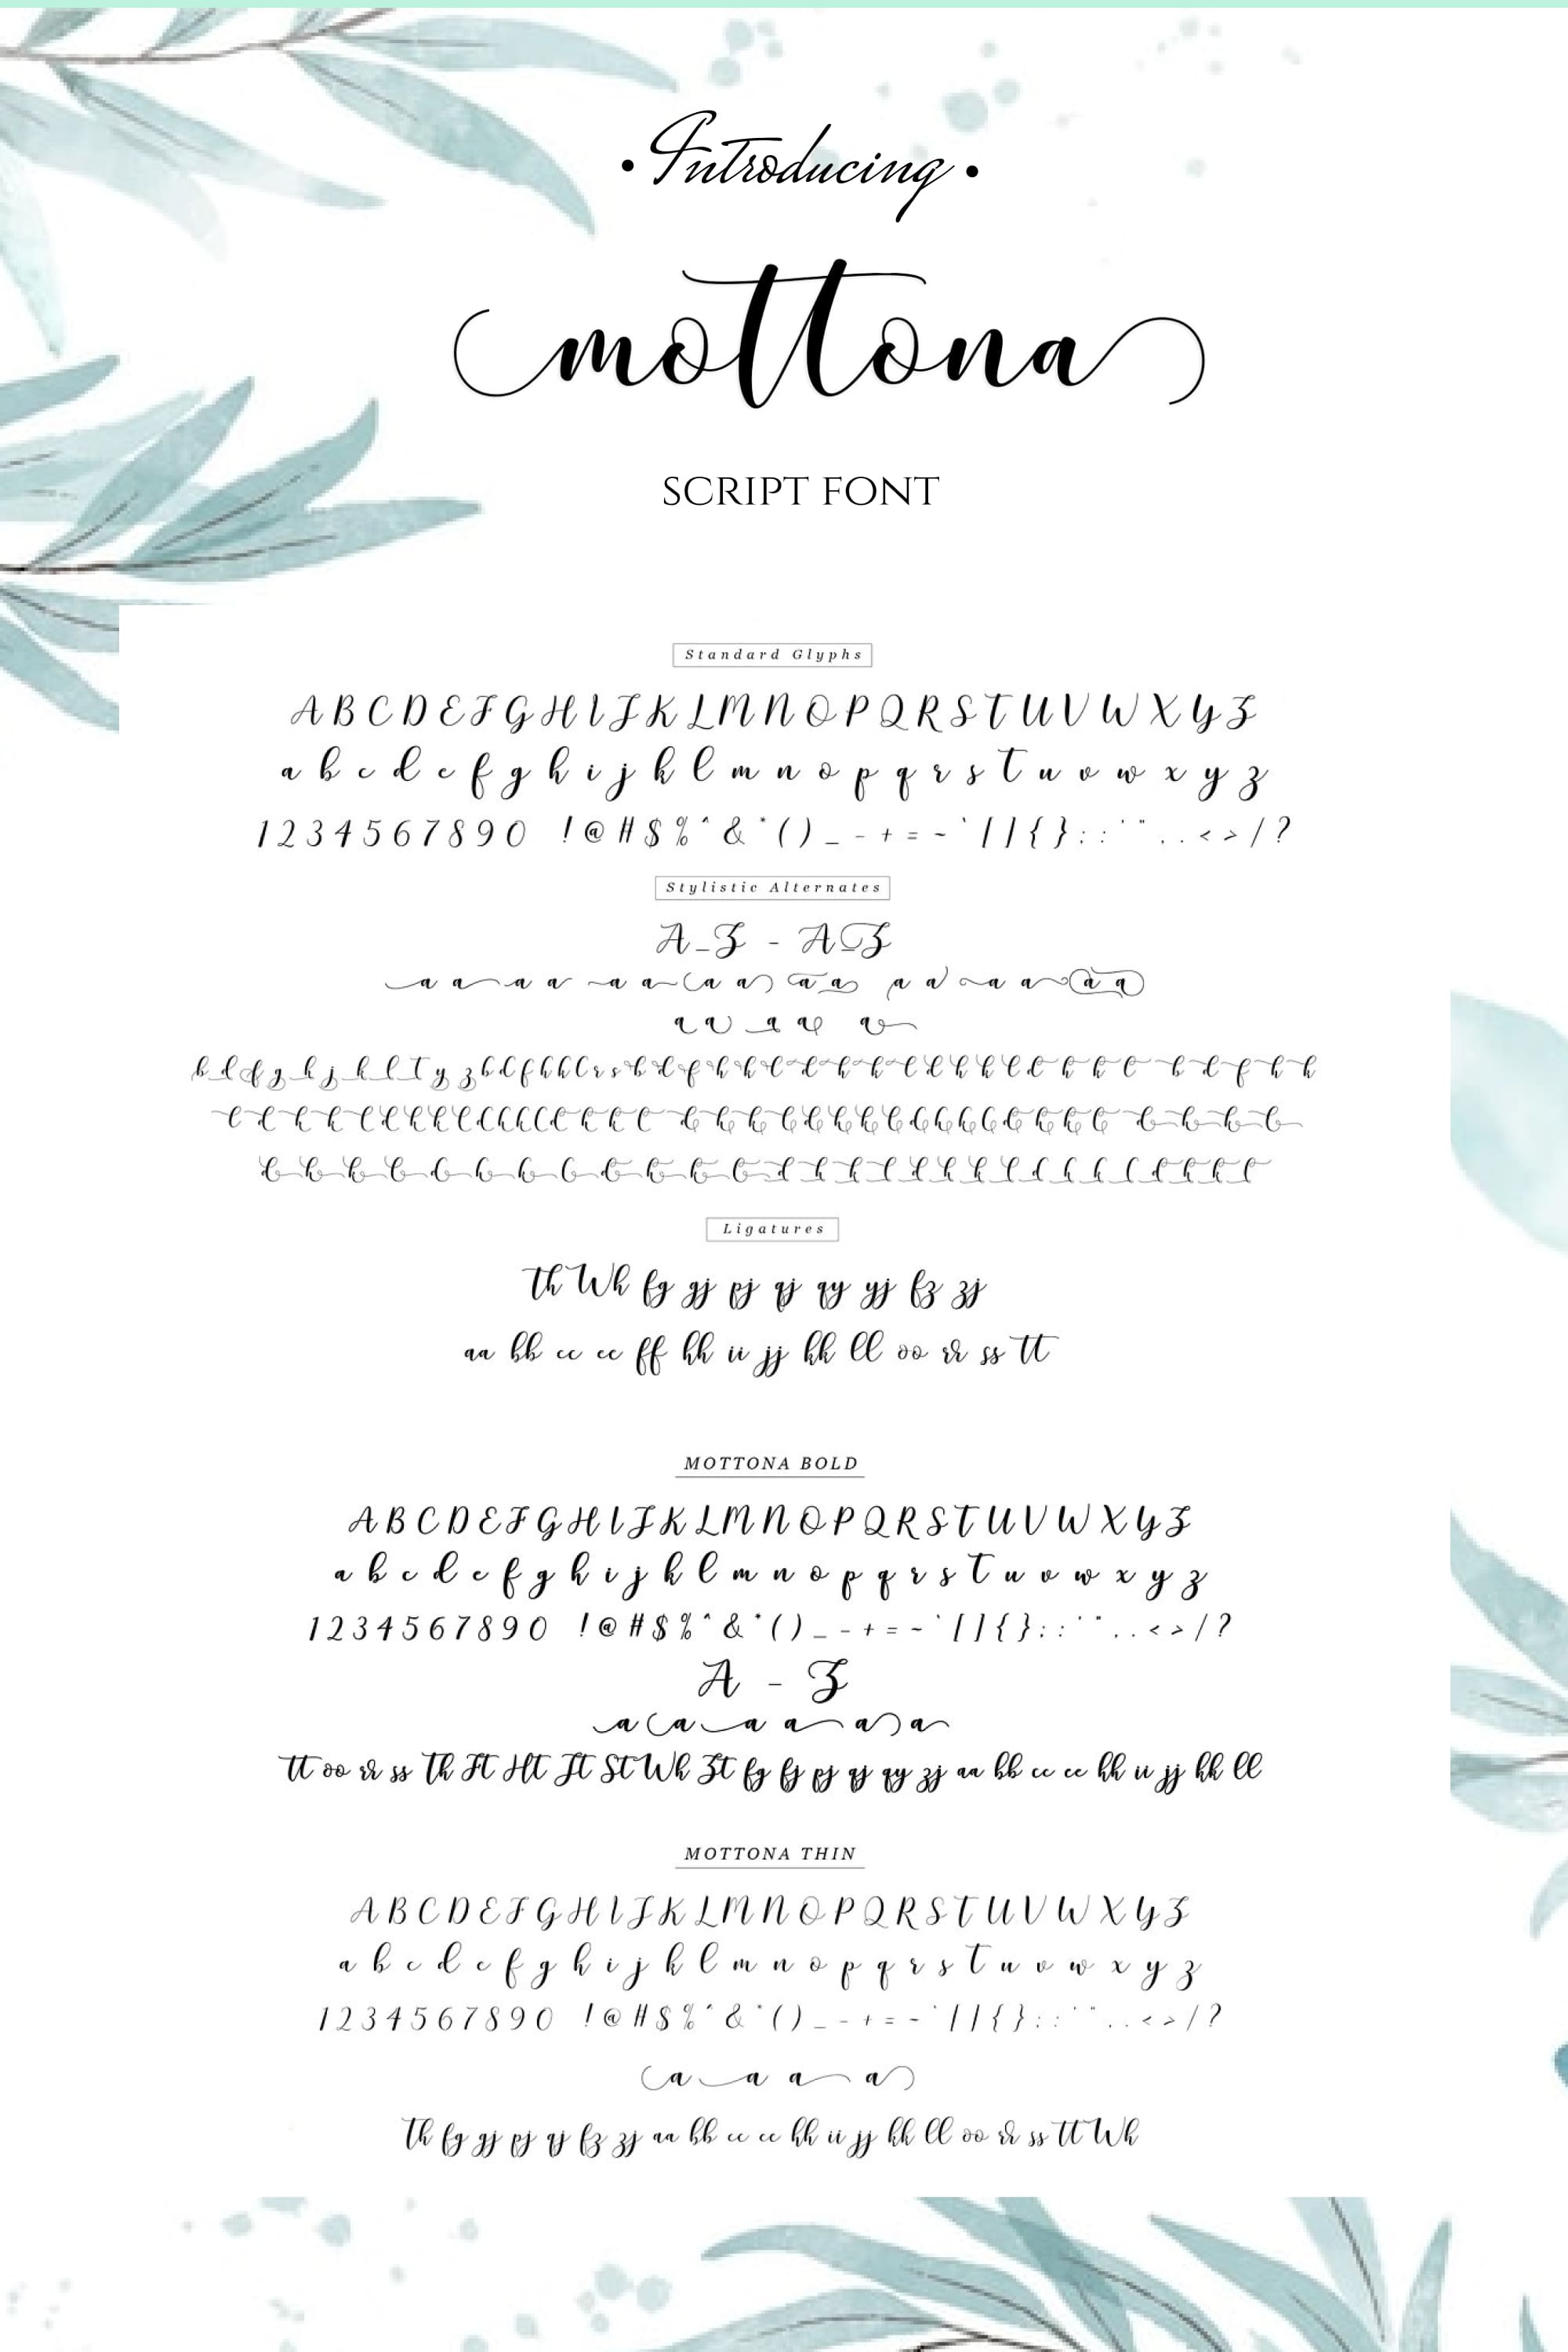 mottona script font pinterest